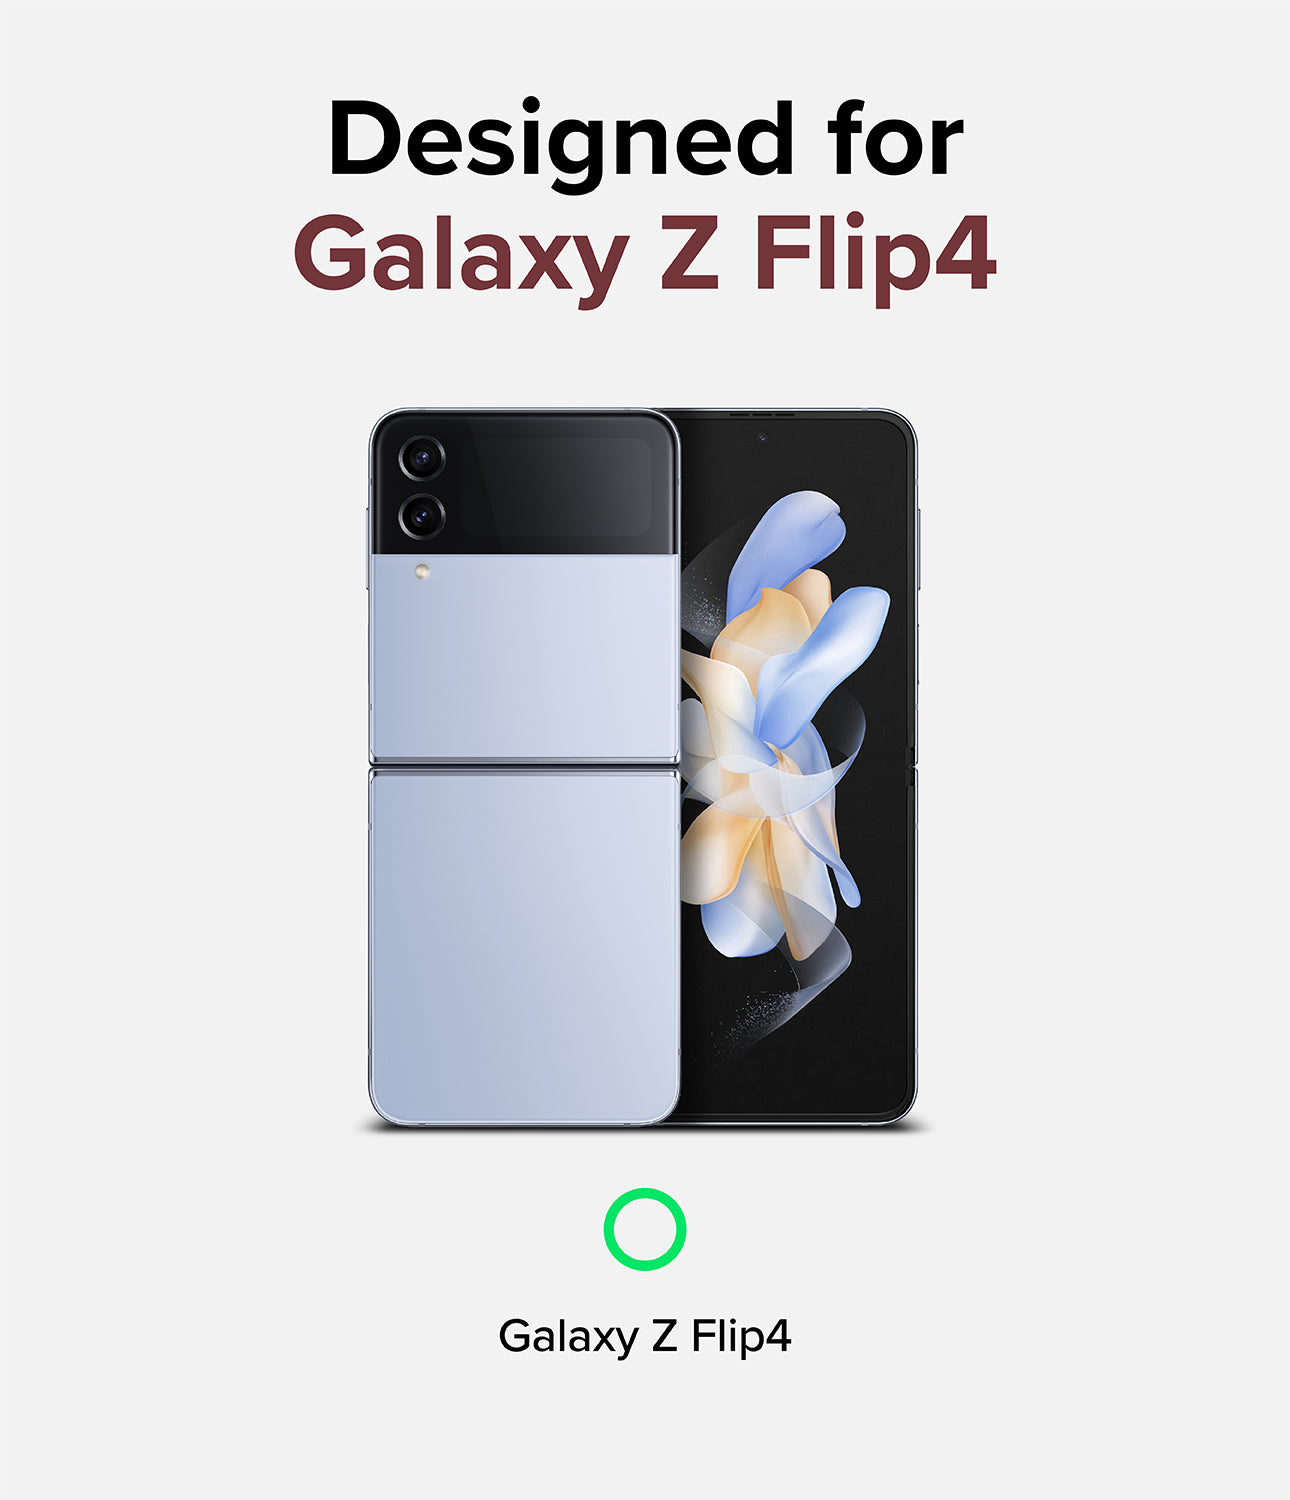 Designed for Galaxy Z Flip 4